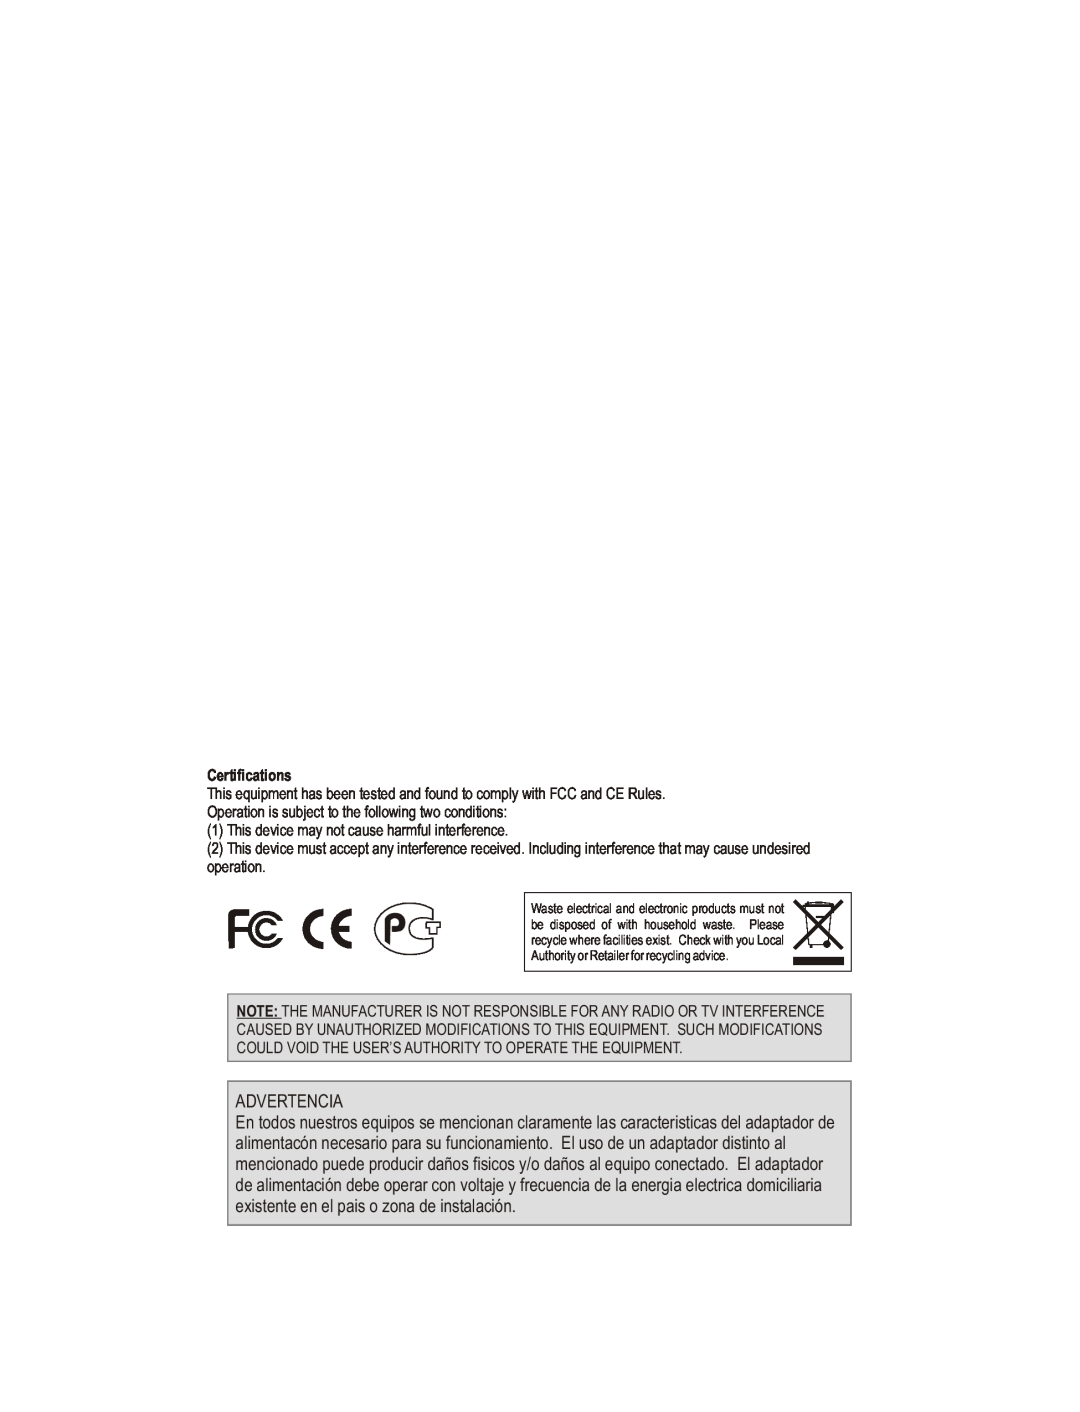 TRENDnet TEW-624UB manual Advertencia, Certifications 